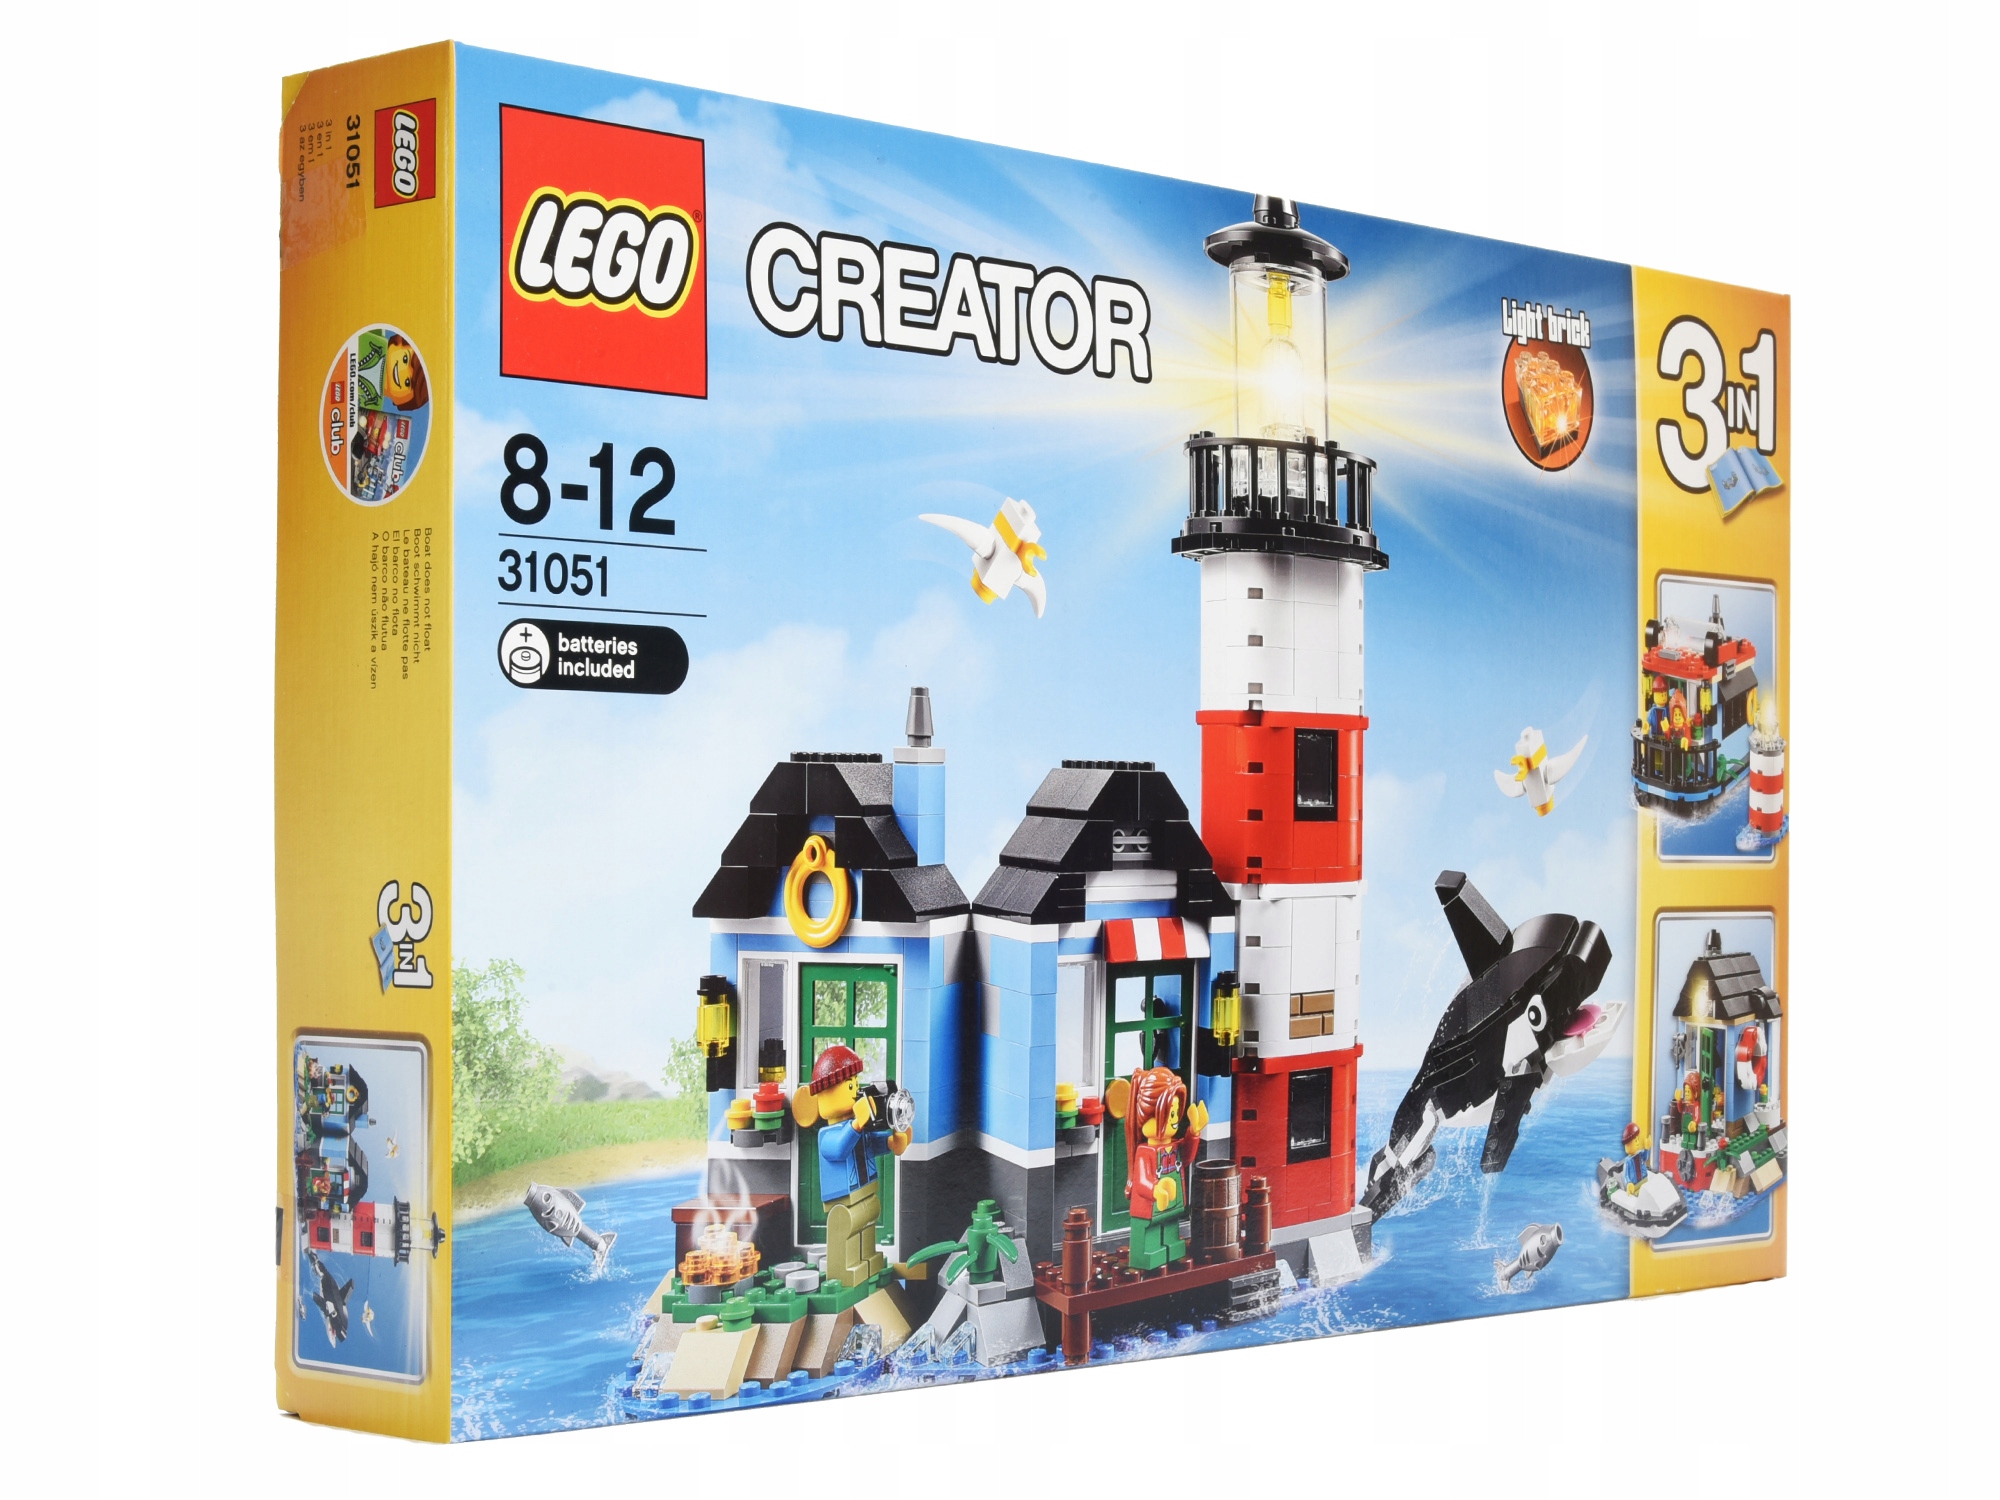 LEGO Creator 31051 Maják MISB 2016 za 2398 Kč - Allegro